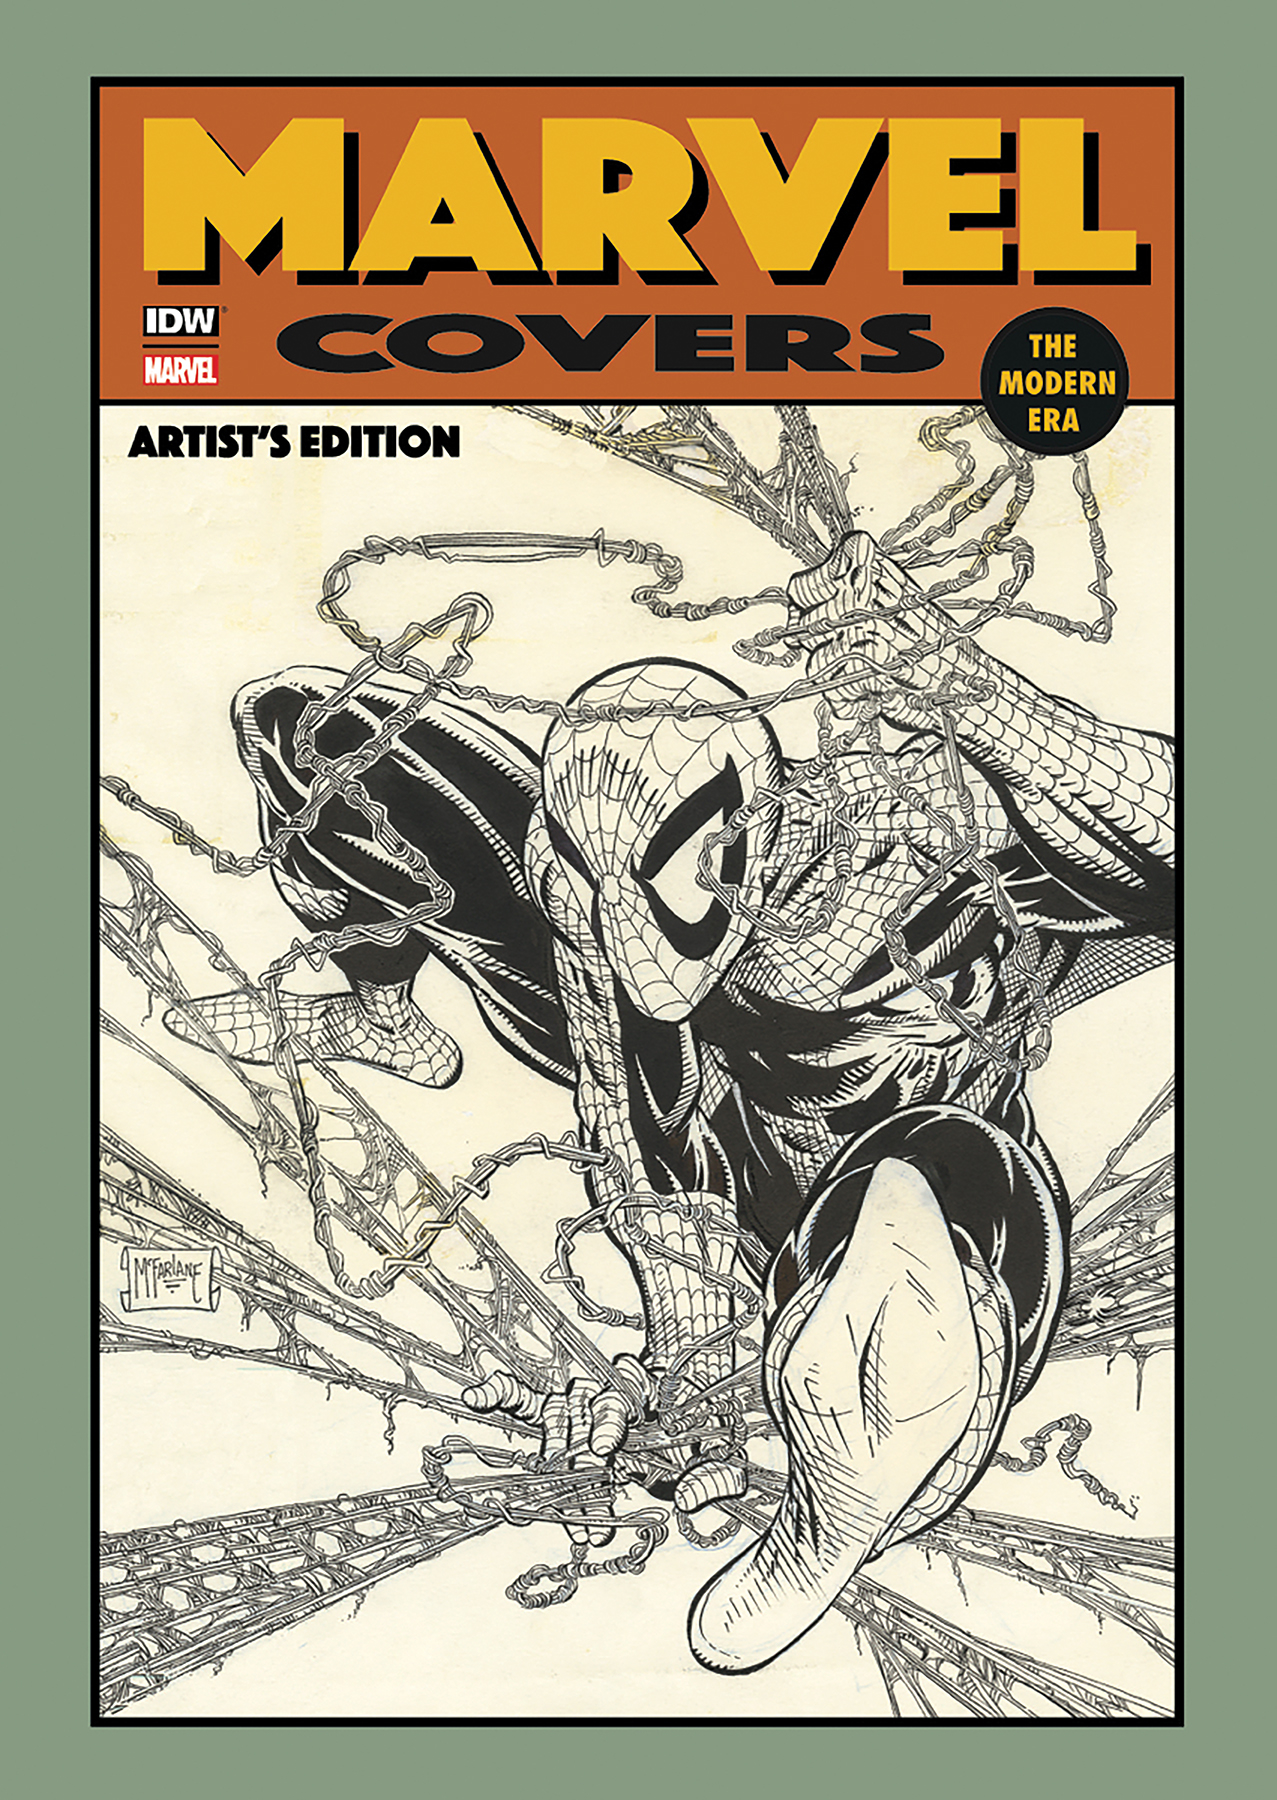 Marvel Covers Modern Era Artist Edition Hardcover #1 McFarlane Cover